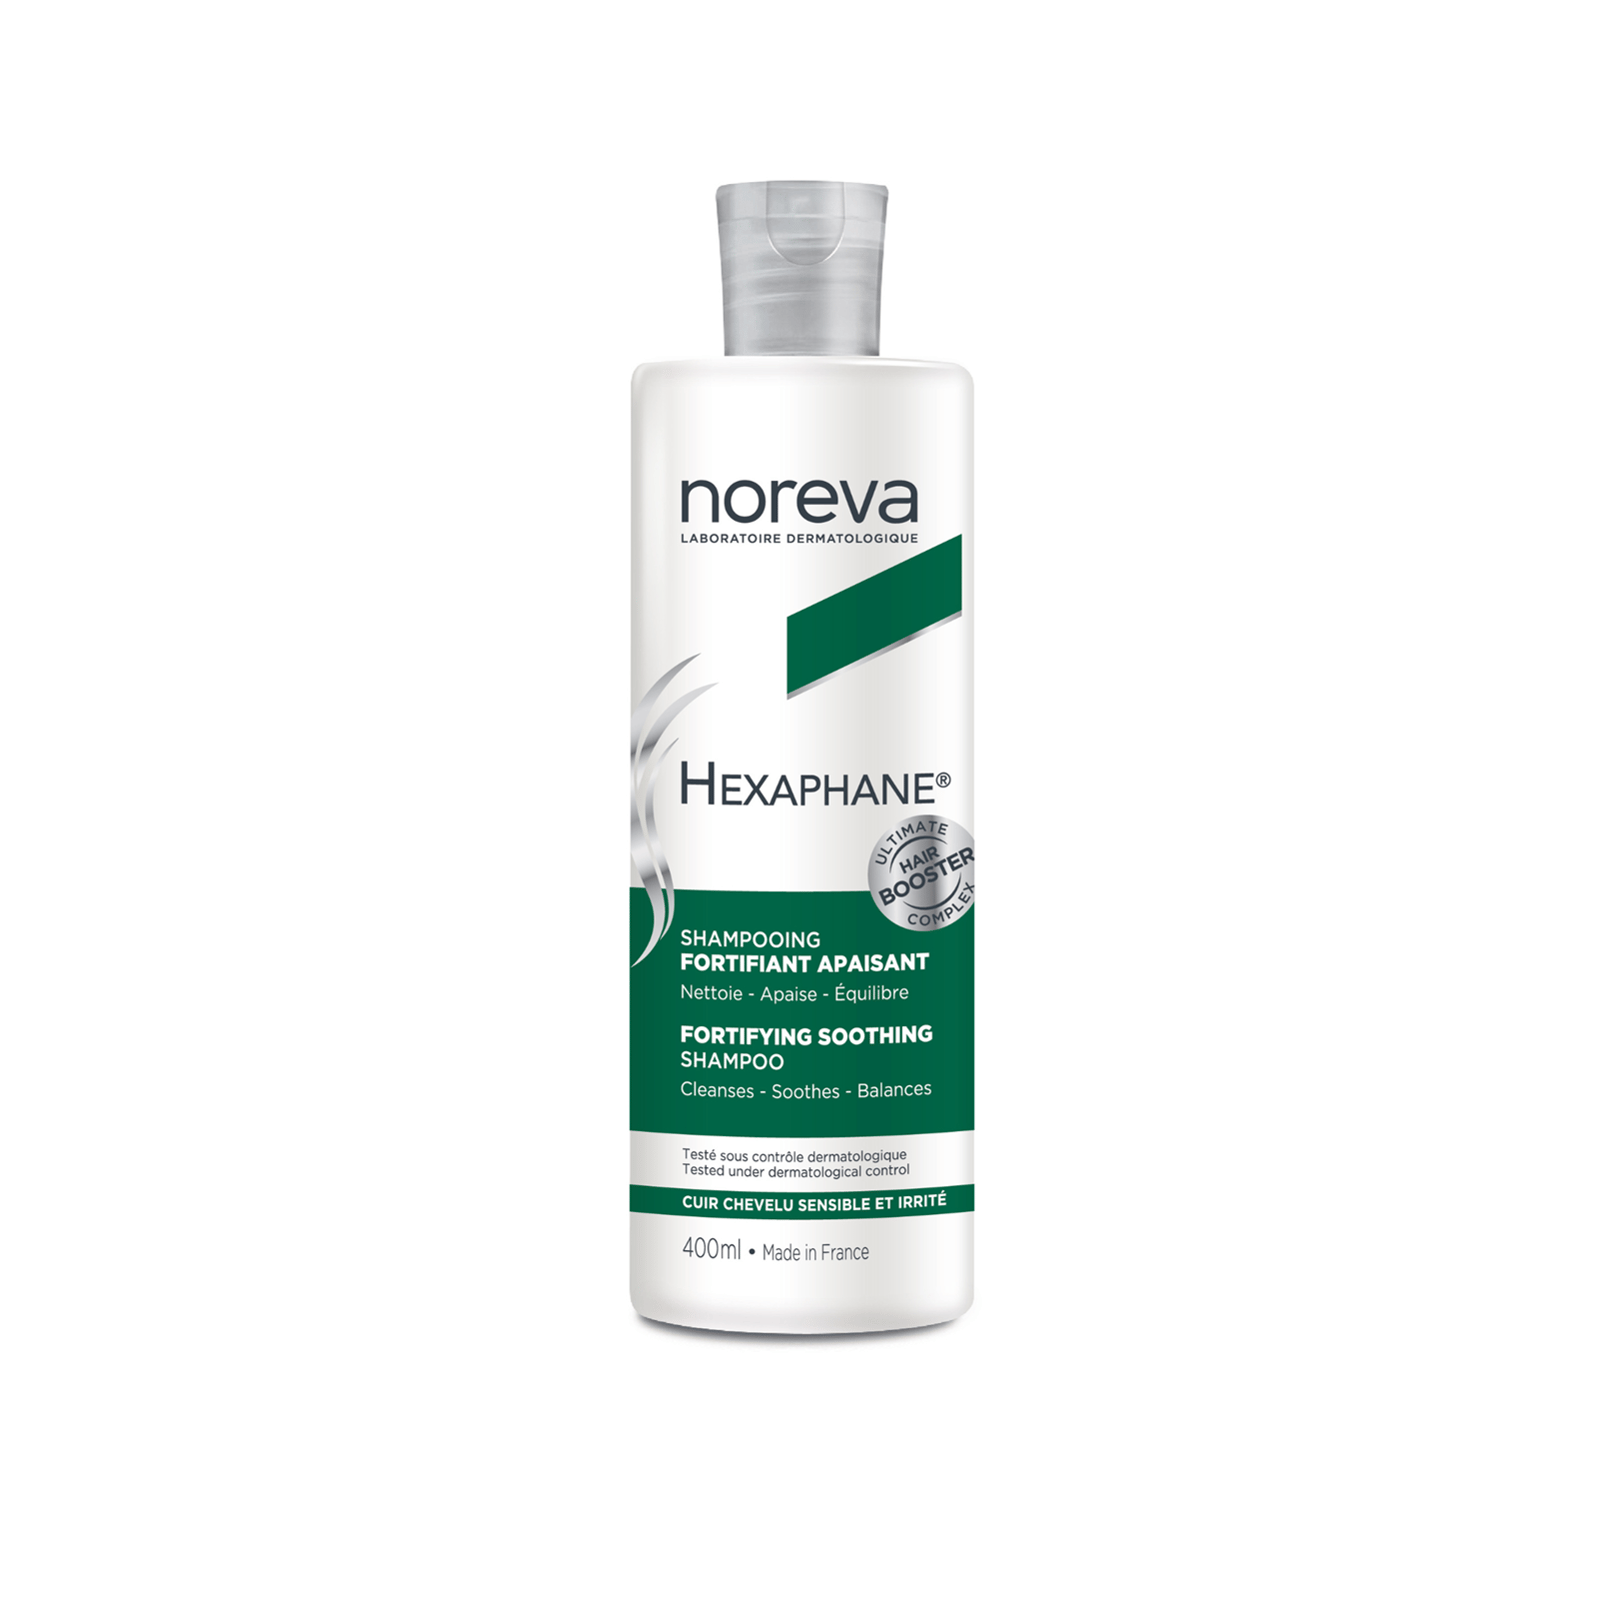 Noreva Hexaphane Fortifying Soothing Shampoo 400ml (13.53fl oz)